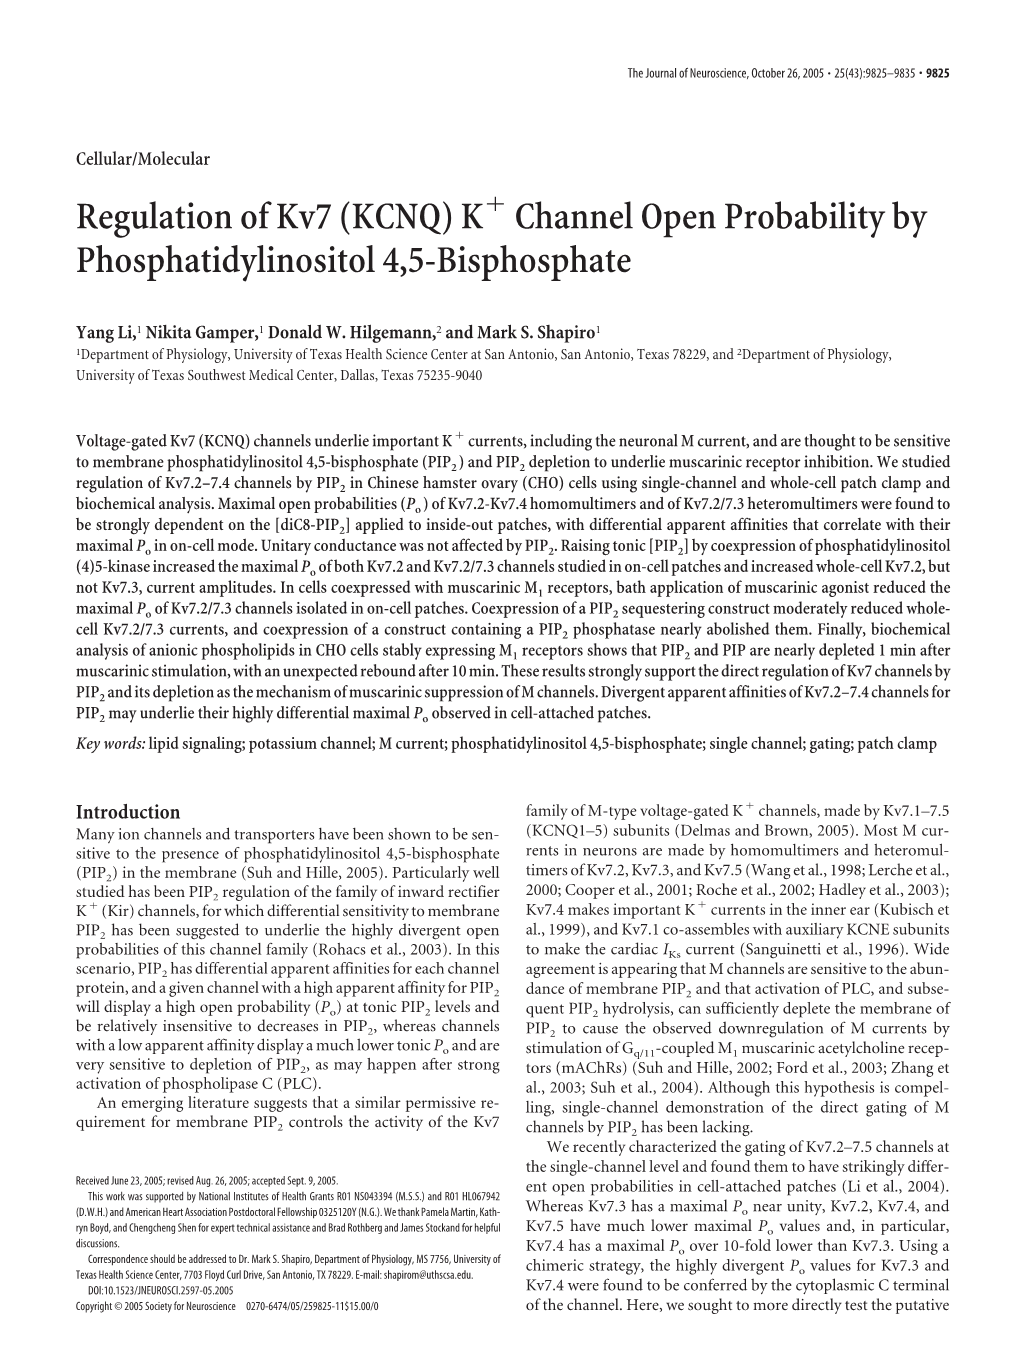 Regulation of Kv7 (KCNQ) Kϩ Channel Open Probability by Phosphatidylinositol 4,5-Bisphosphate